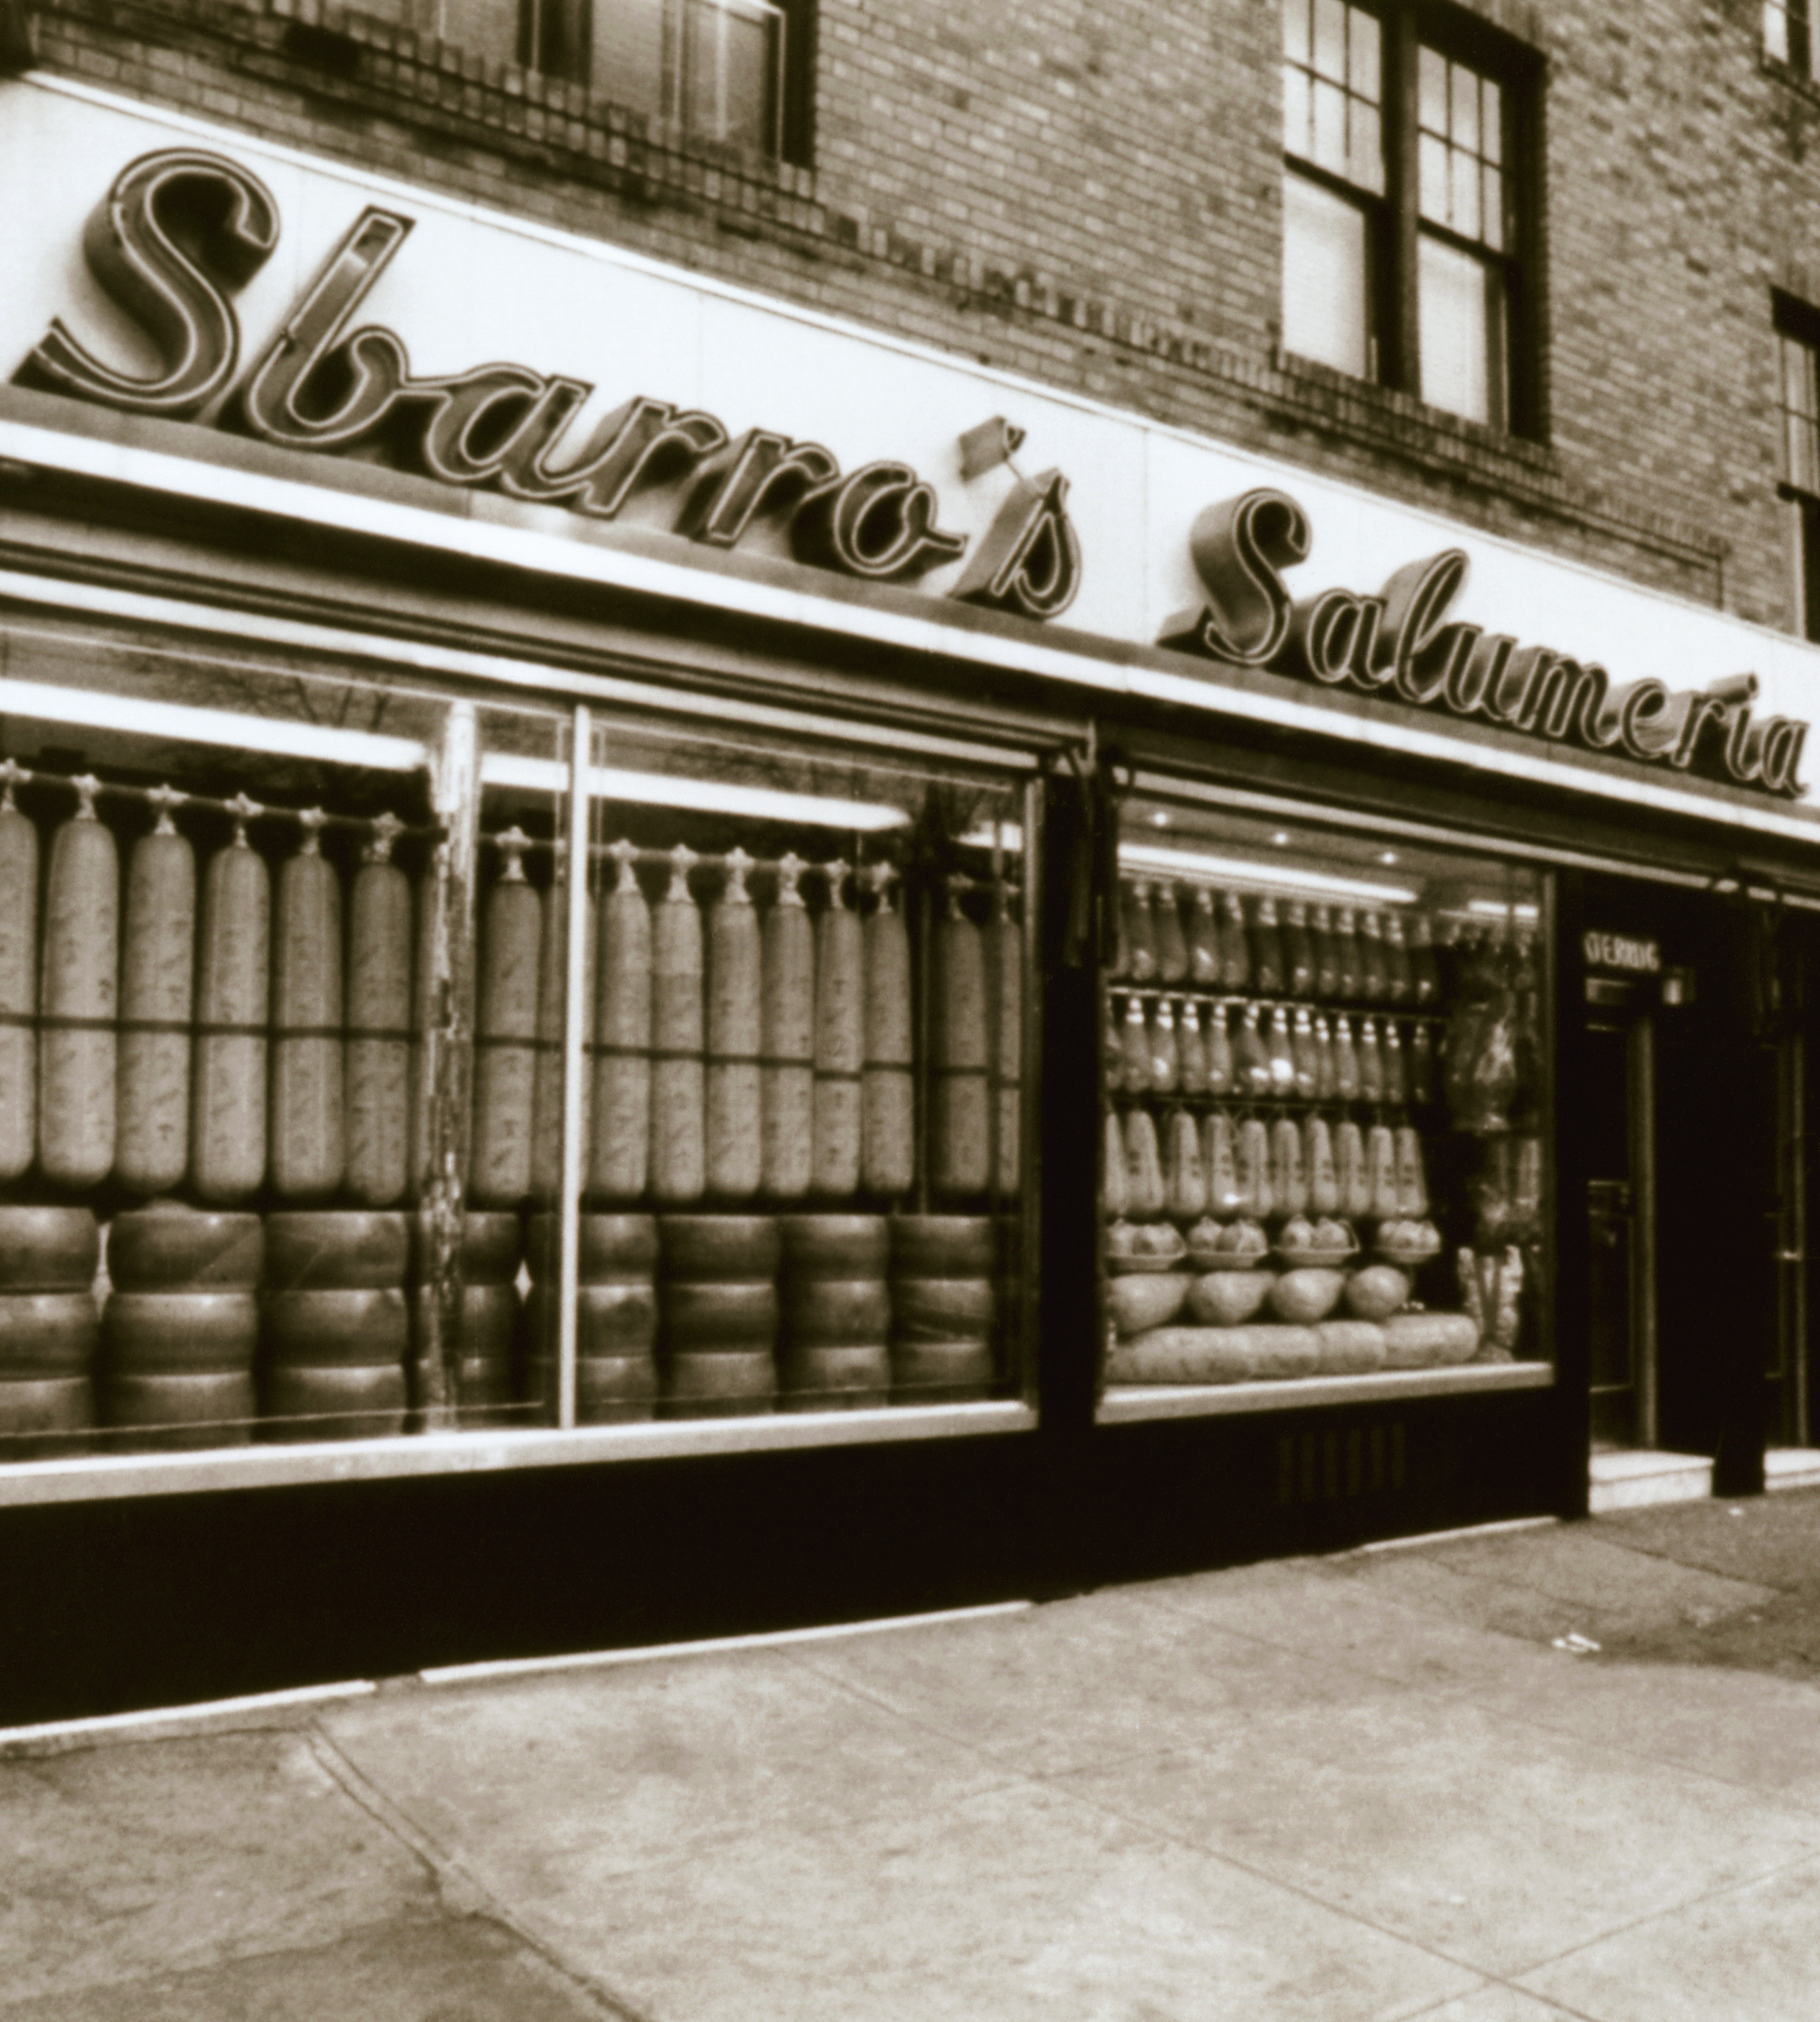 Historic storefront reading “Sbarro’s Salumeria,